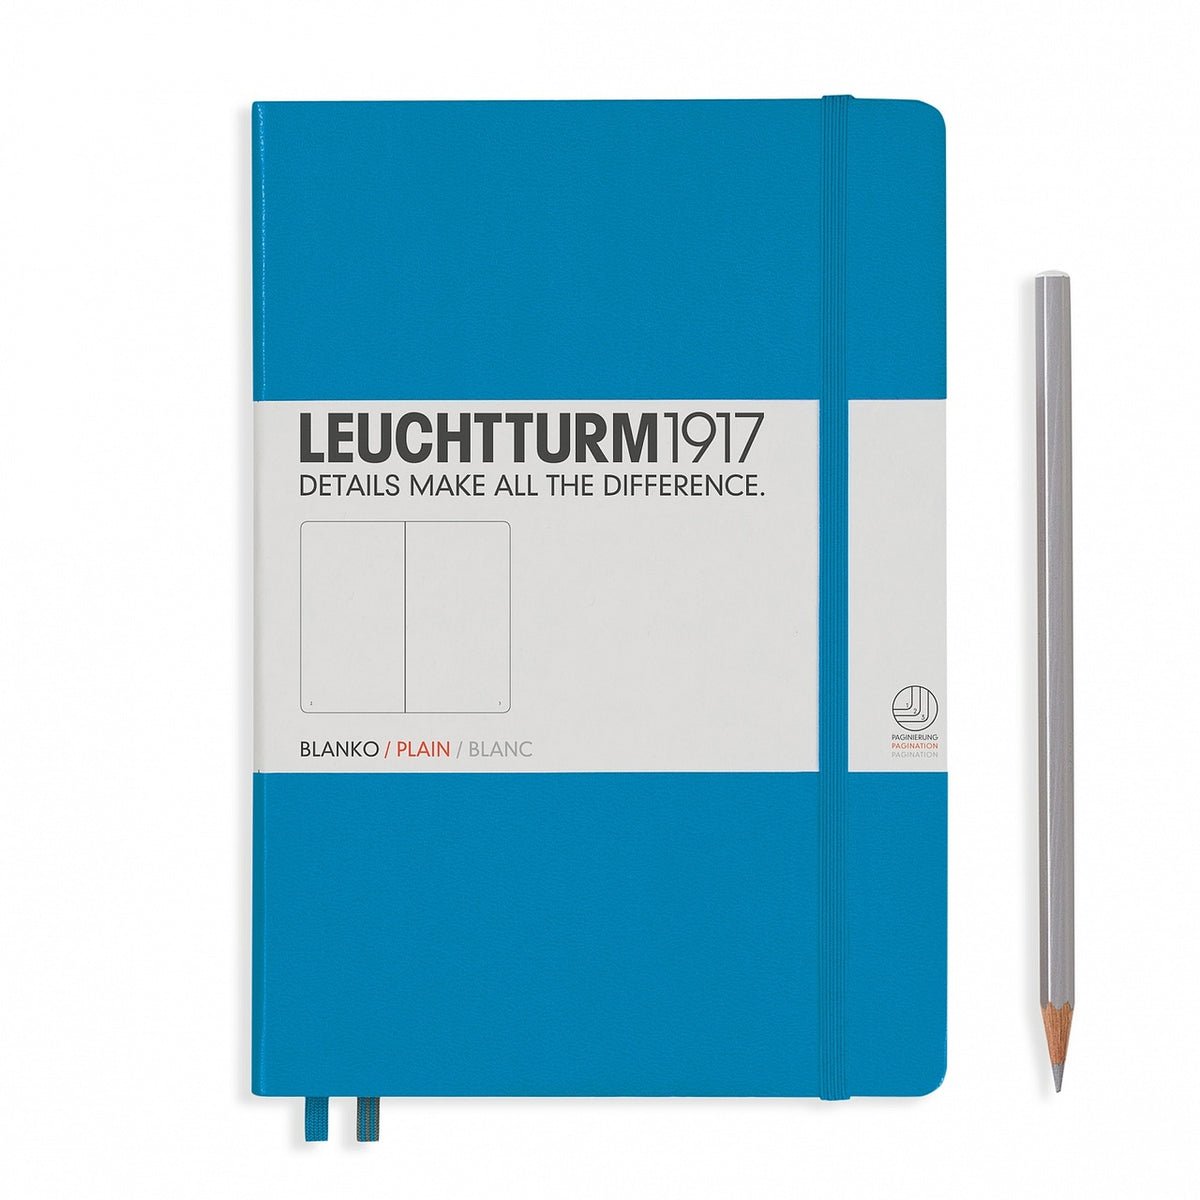 Leuchtturm1917 Notebook - A5, Blank - BiColor Azure/Lime - Anderson Pens,  Inc.